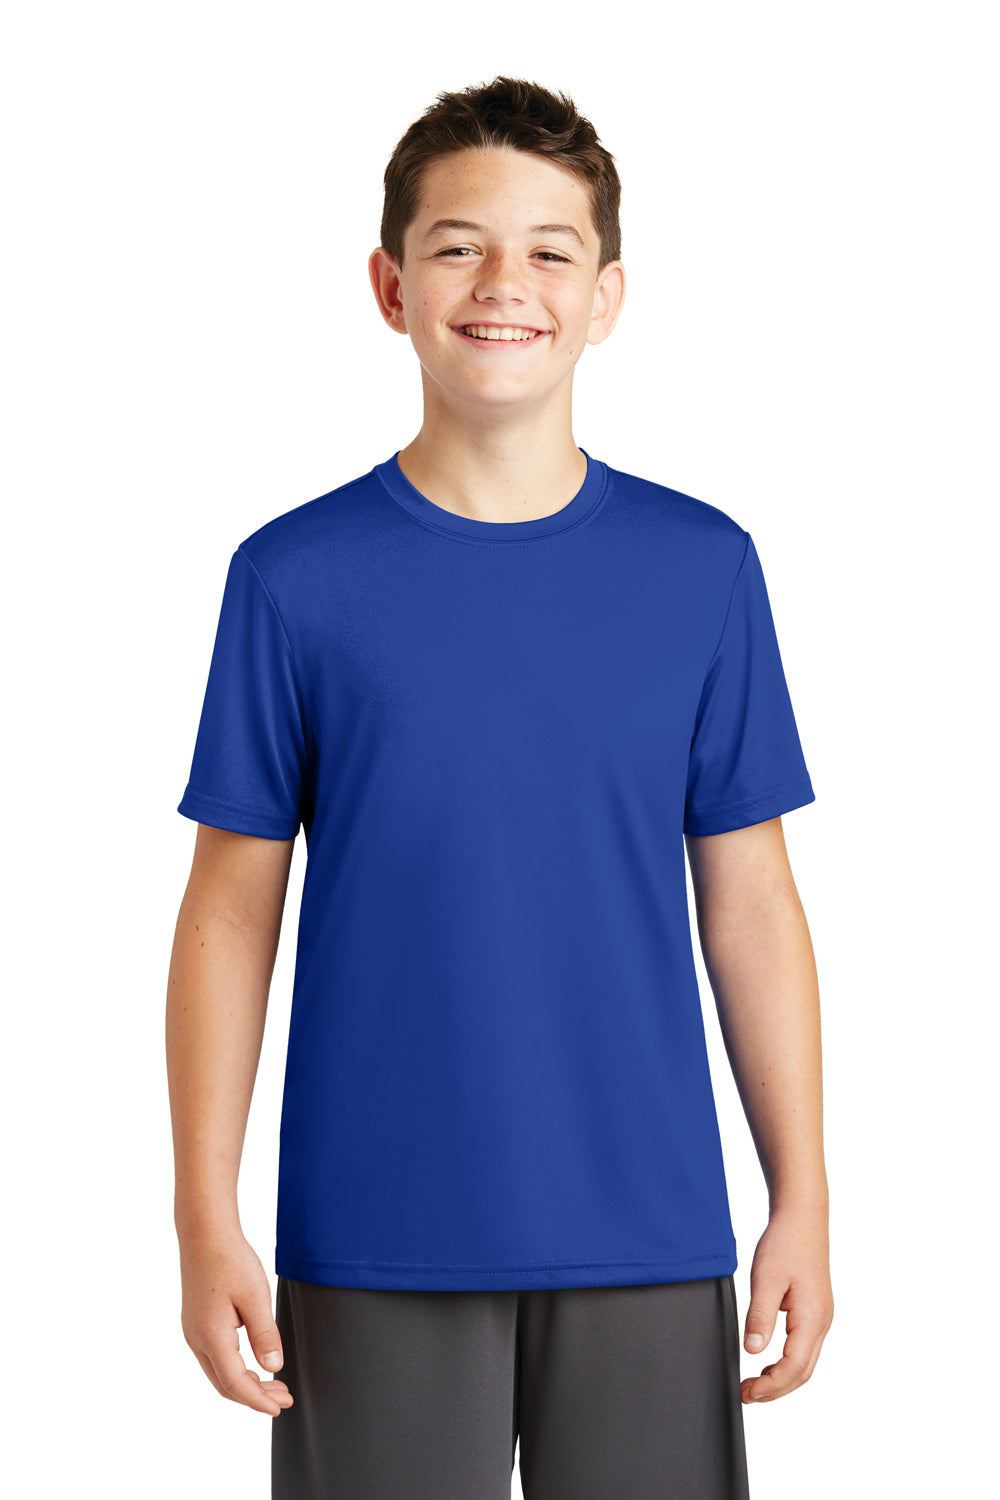 Sport-Tek YST320 Youth Tough Moisture Wicking Short Sleeve Crewneck T-Shirt Royal Blue Front